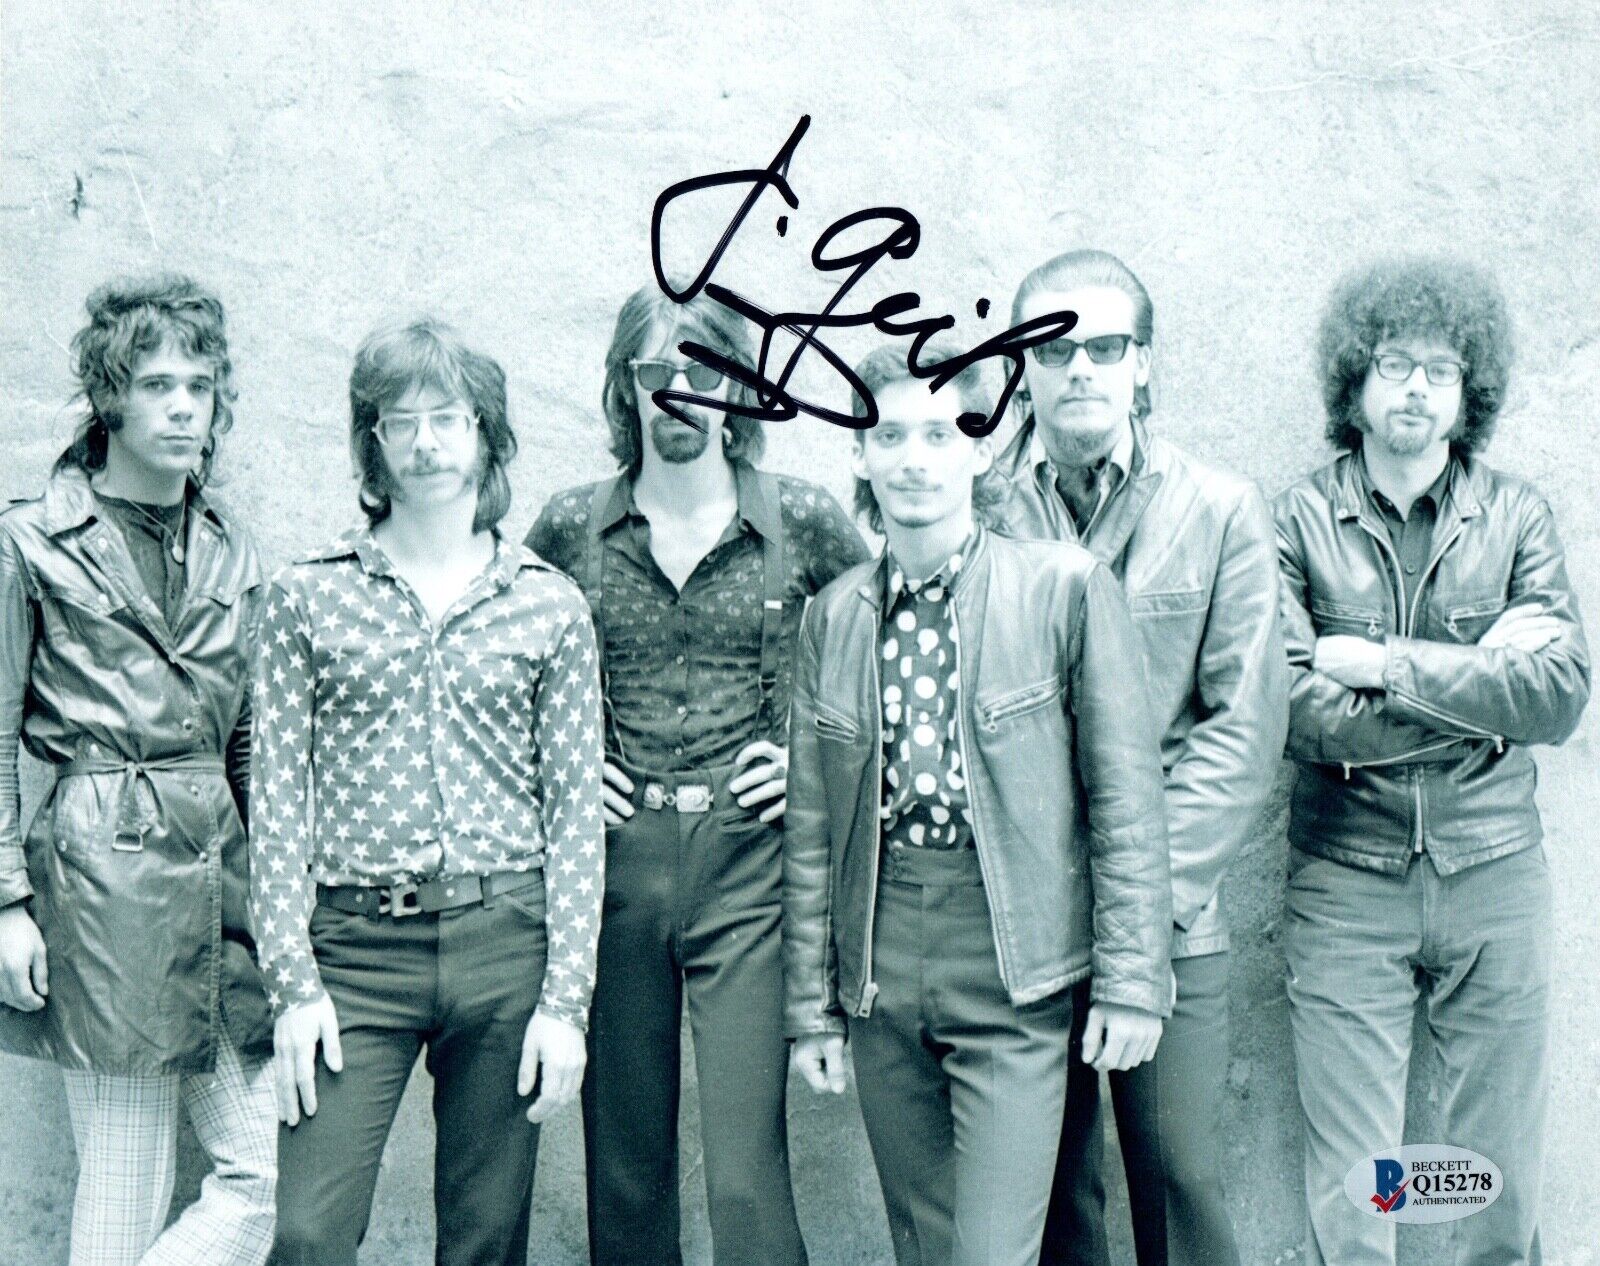 J Geils Signed Autograph 8x10 Photo Poster painting The J Geils Band Lead Guitarist Beckett COA